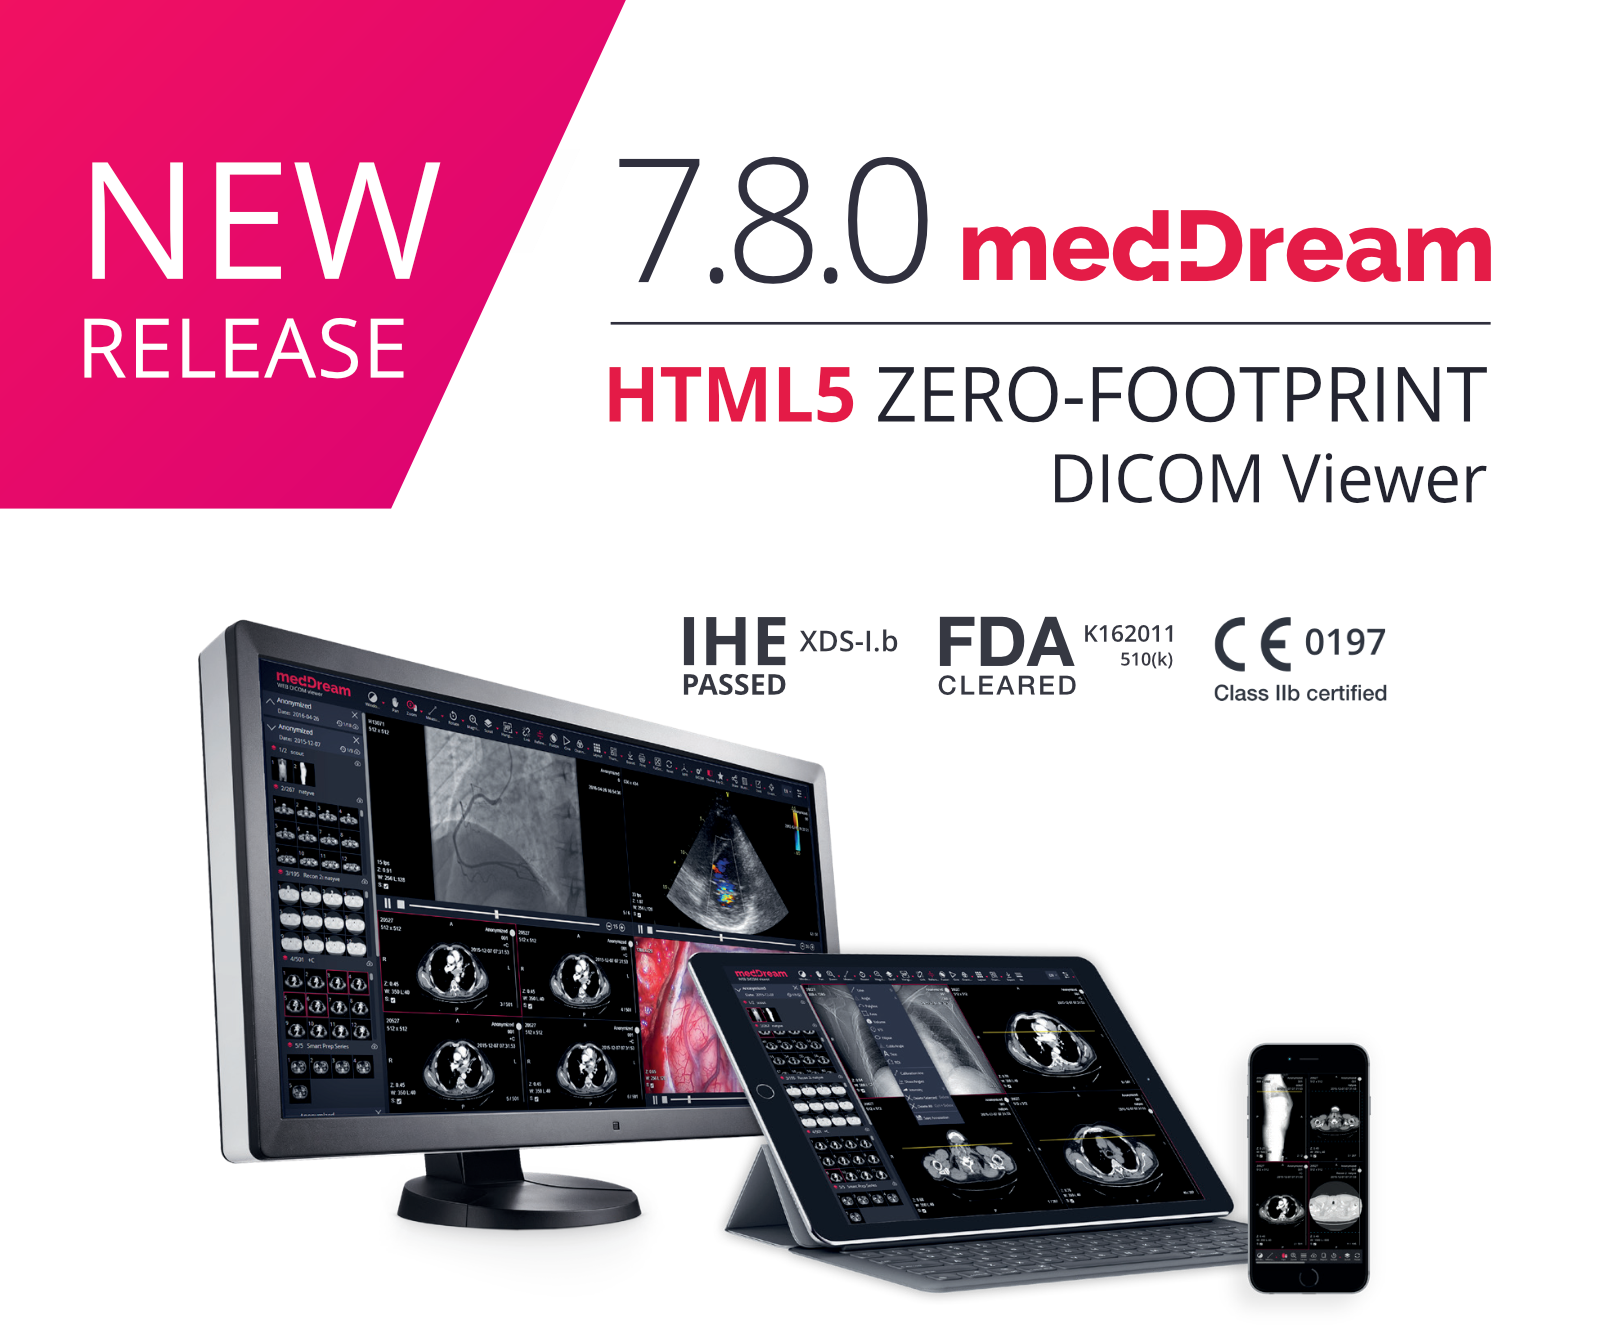 MedDream DICOM Viewer 7.8.0 New Release Cover